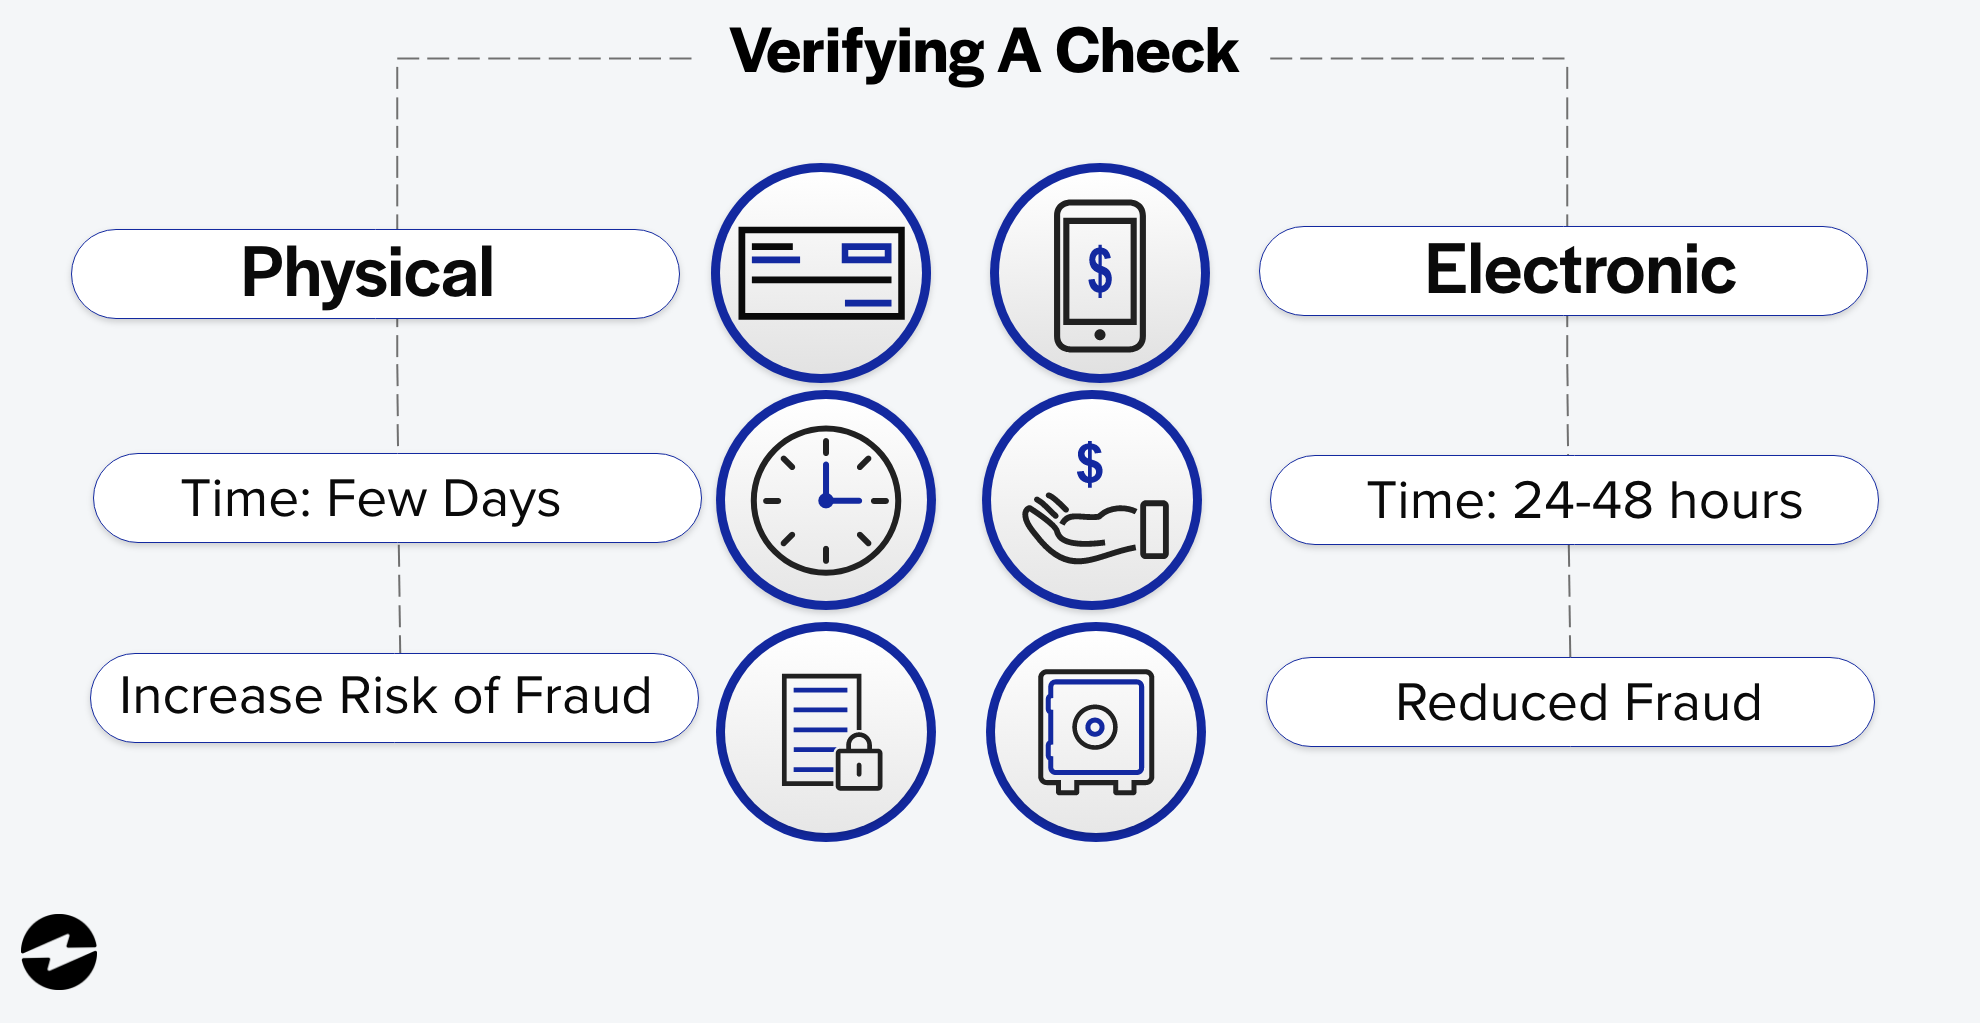 Verifying a physical check vs an electronic check